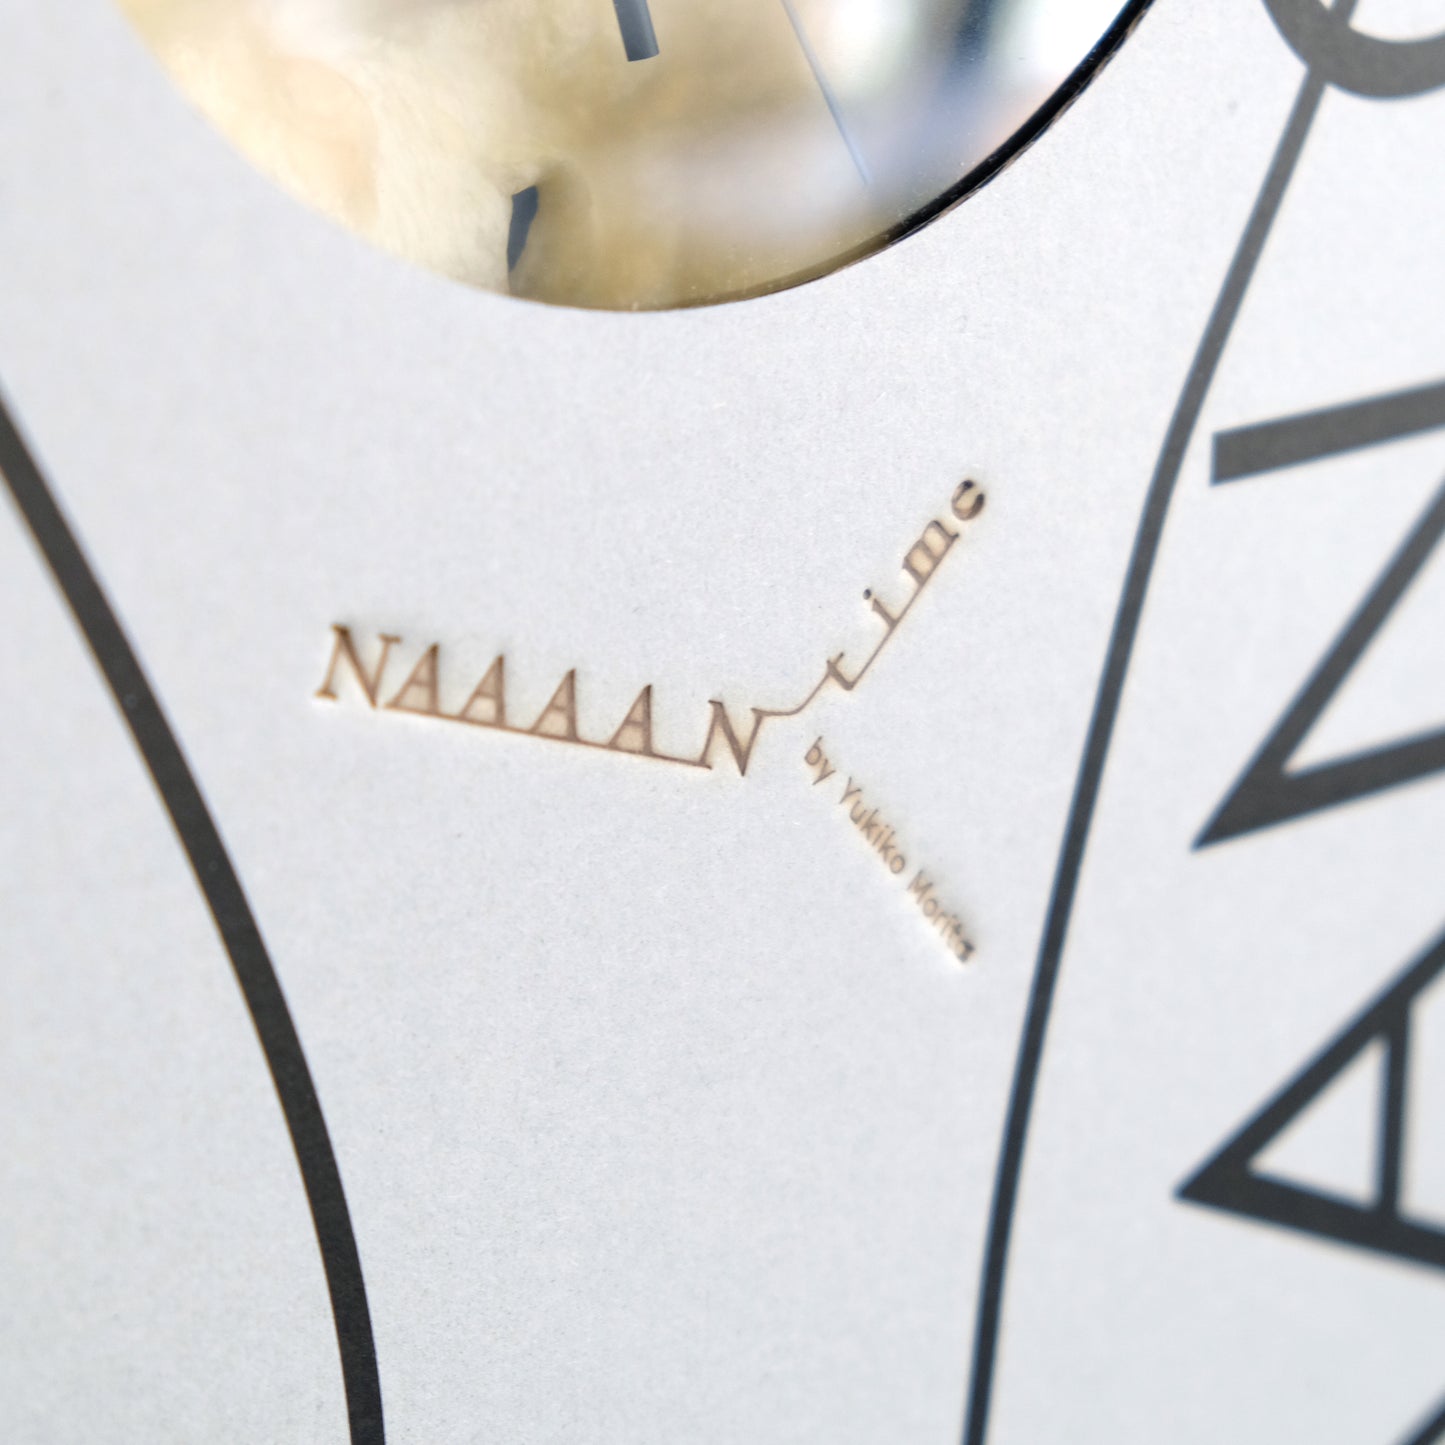 NAAAAN Time Flat: A Clock Made of Real Naan Bread!